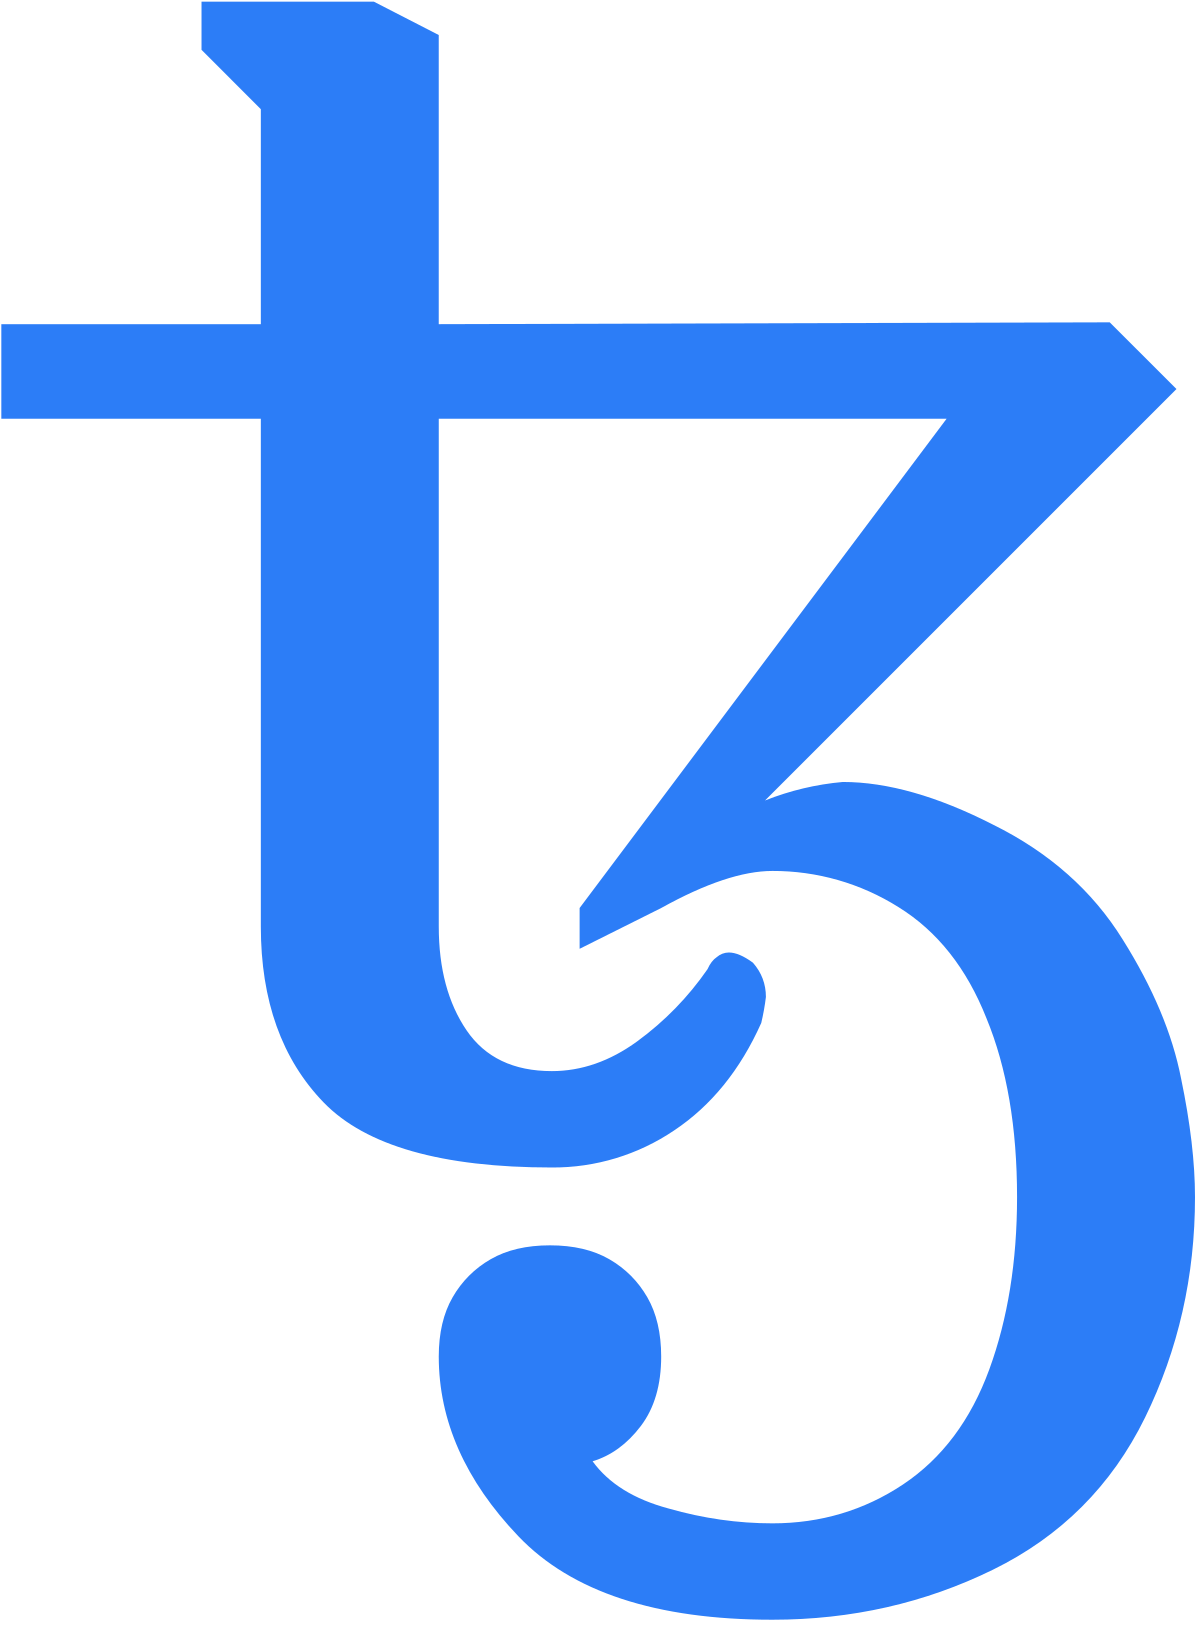 Arquivo:Tezos logo.svg - Wikimedia Commons